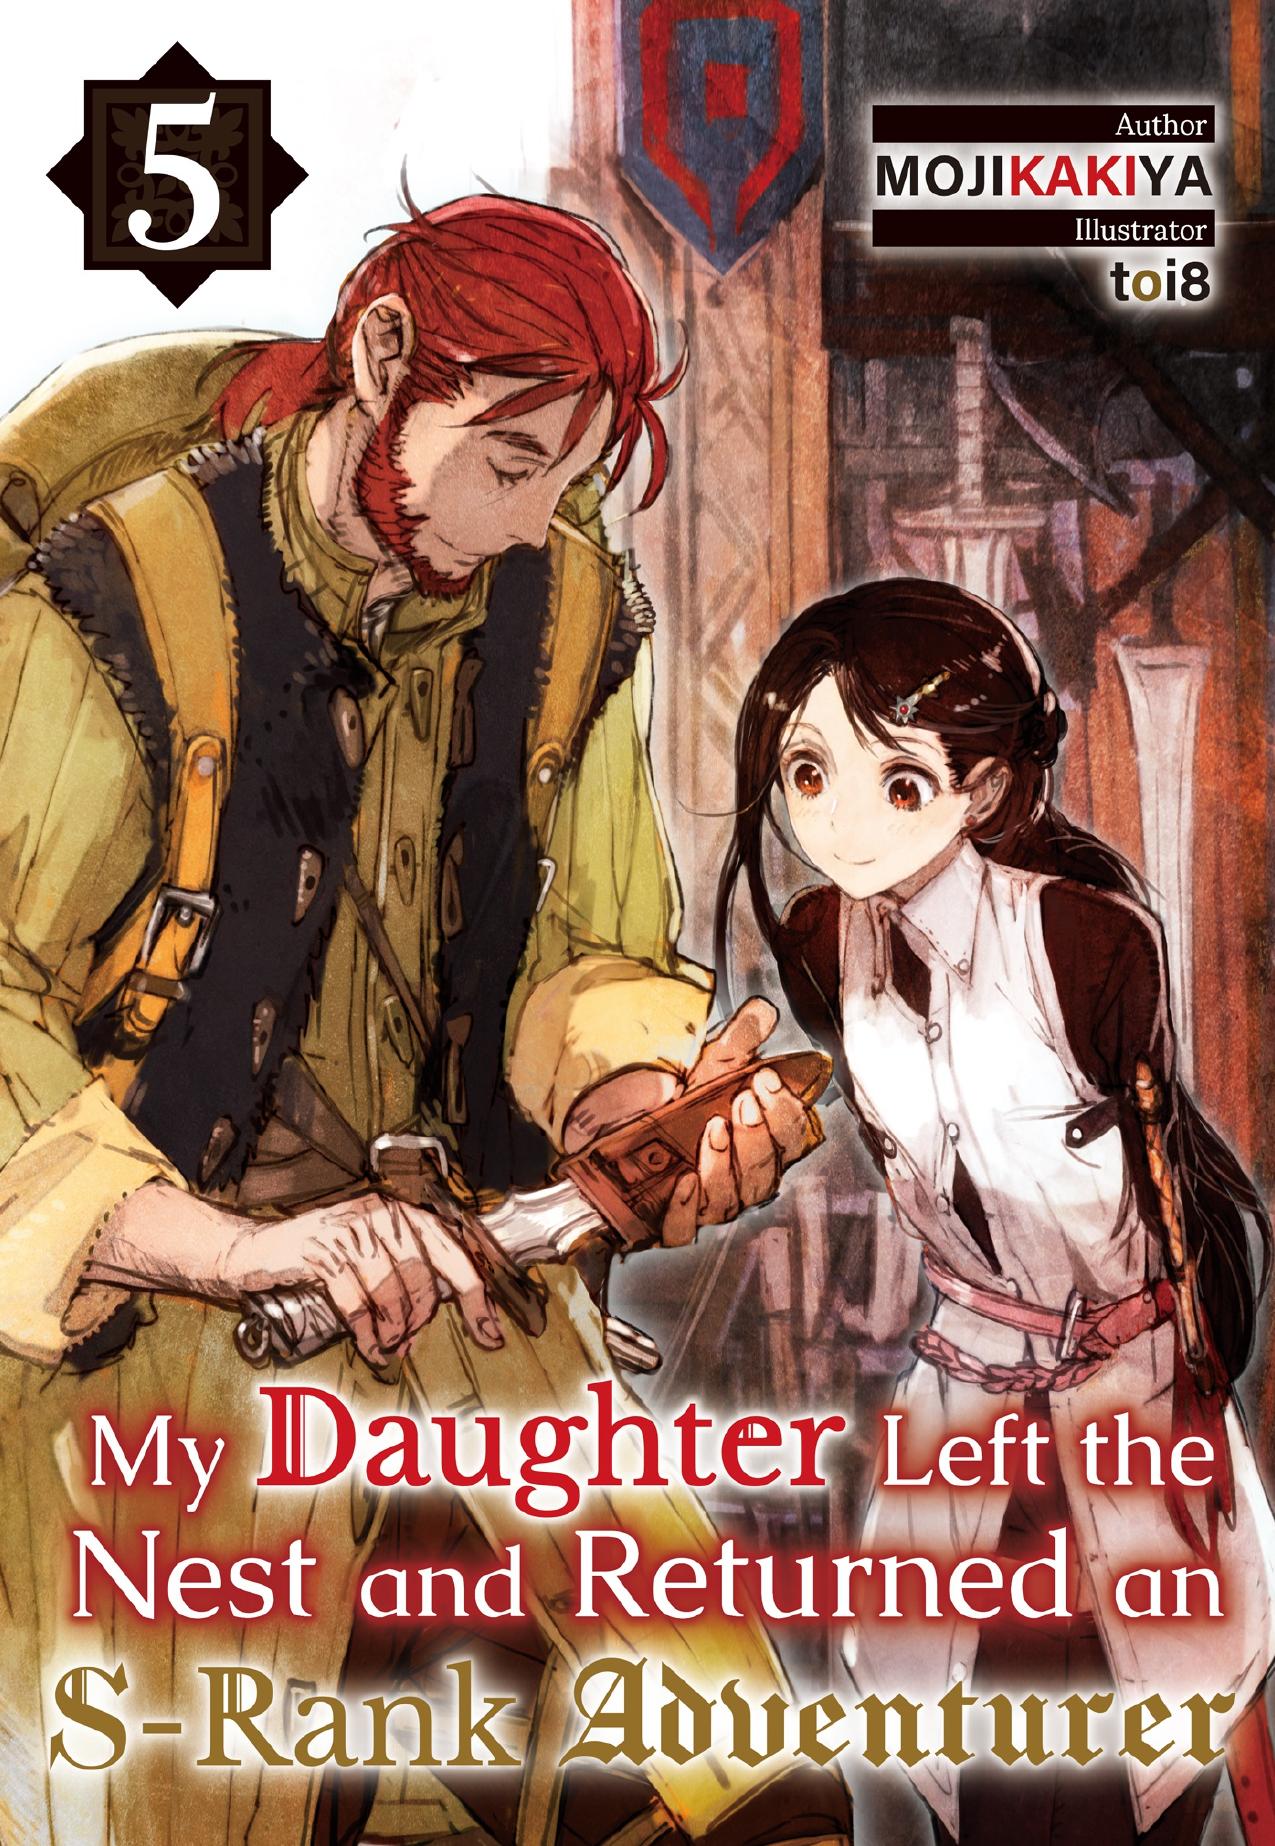 My Daughter Left the Nest and Returned an S-Rank Adventurer: Volume 5 by MOJIKAKIYA